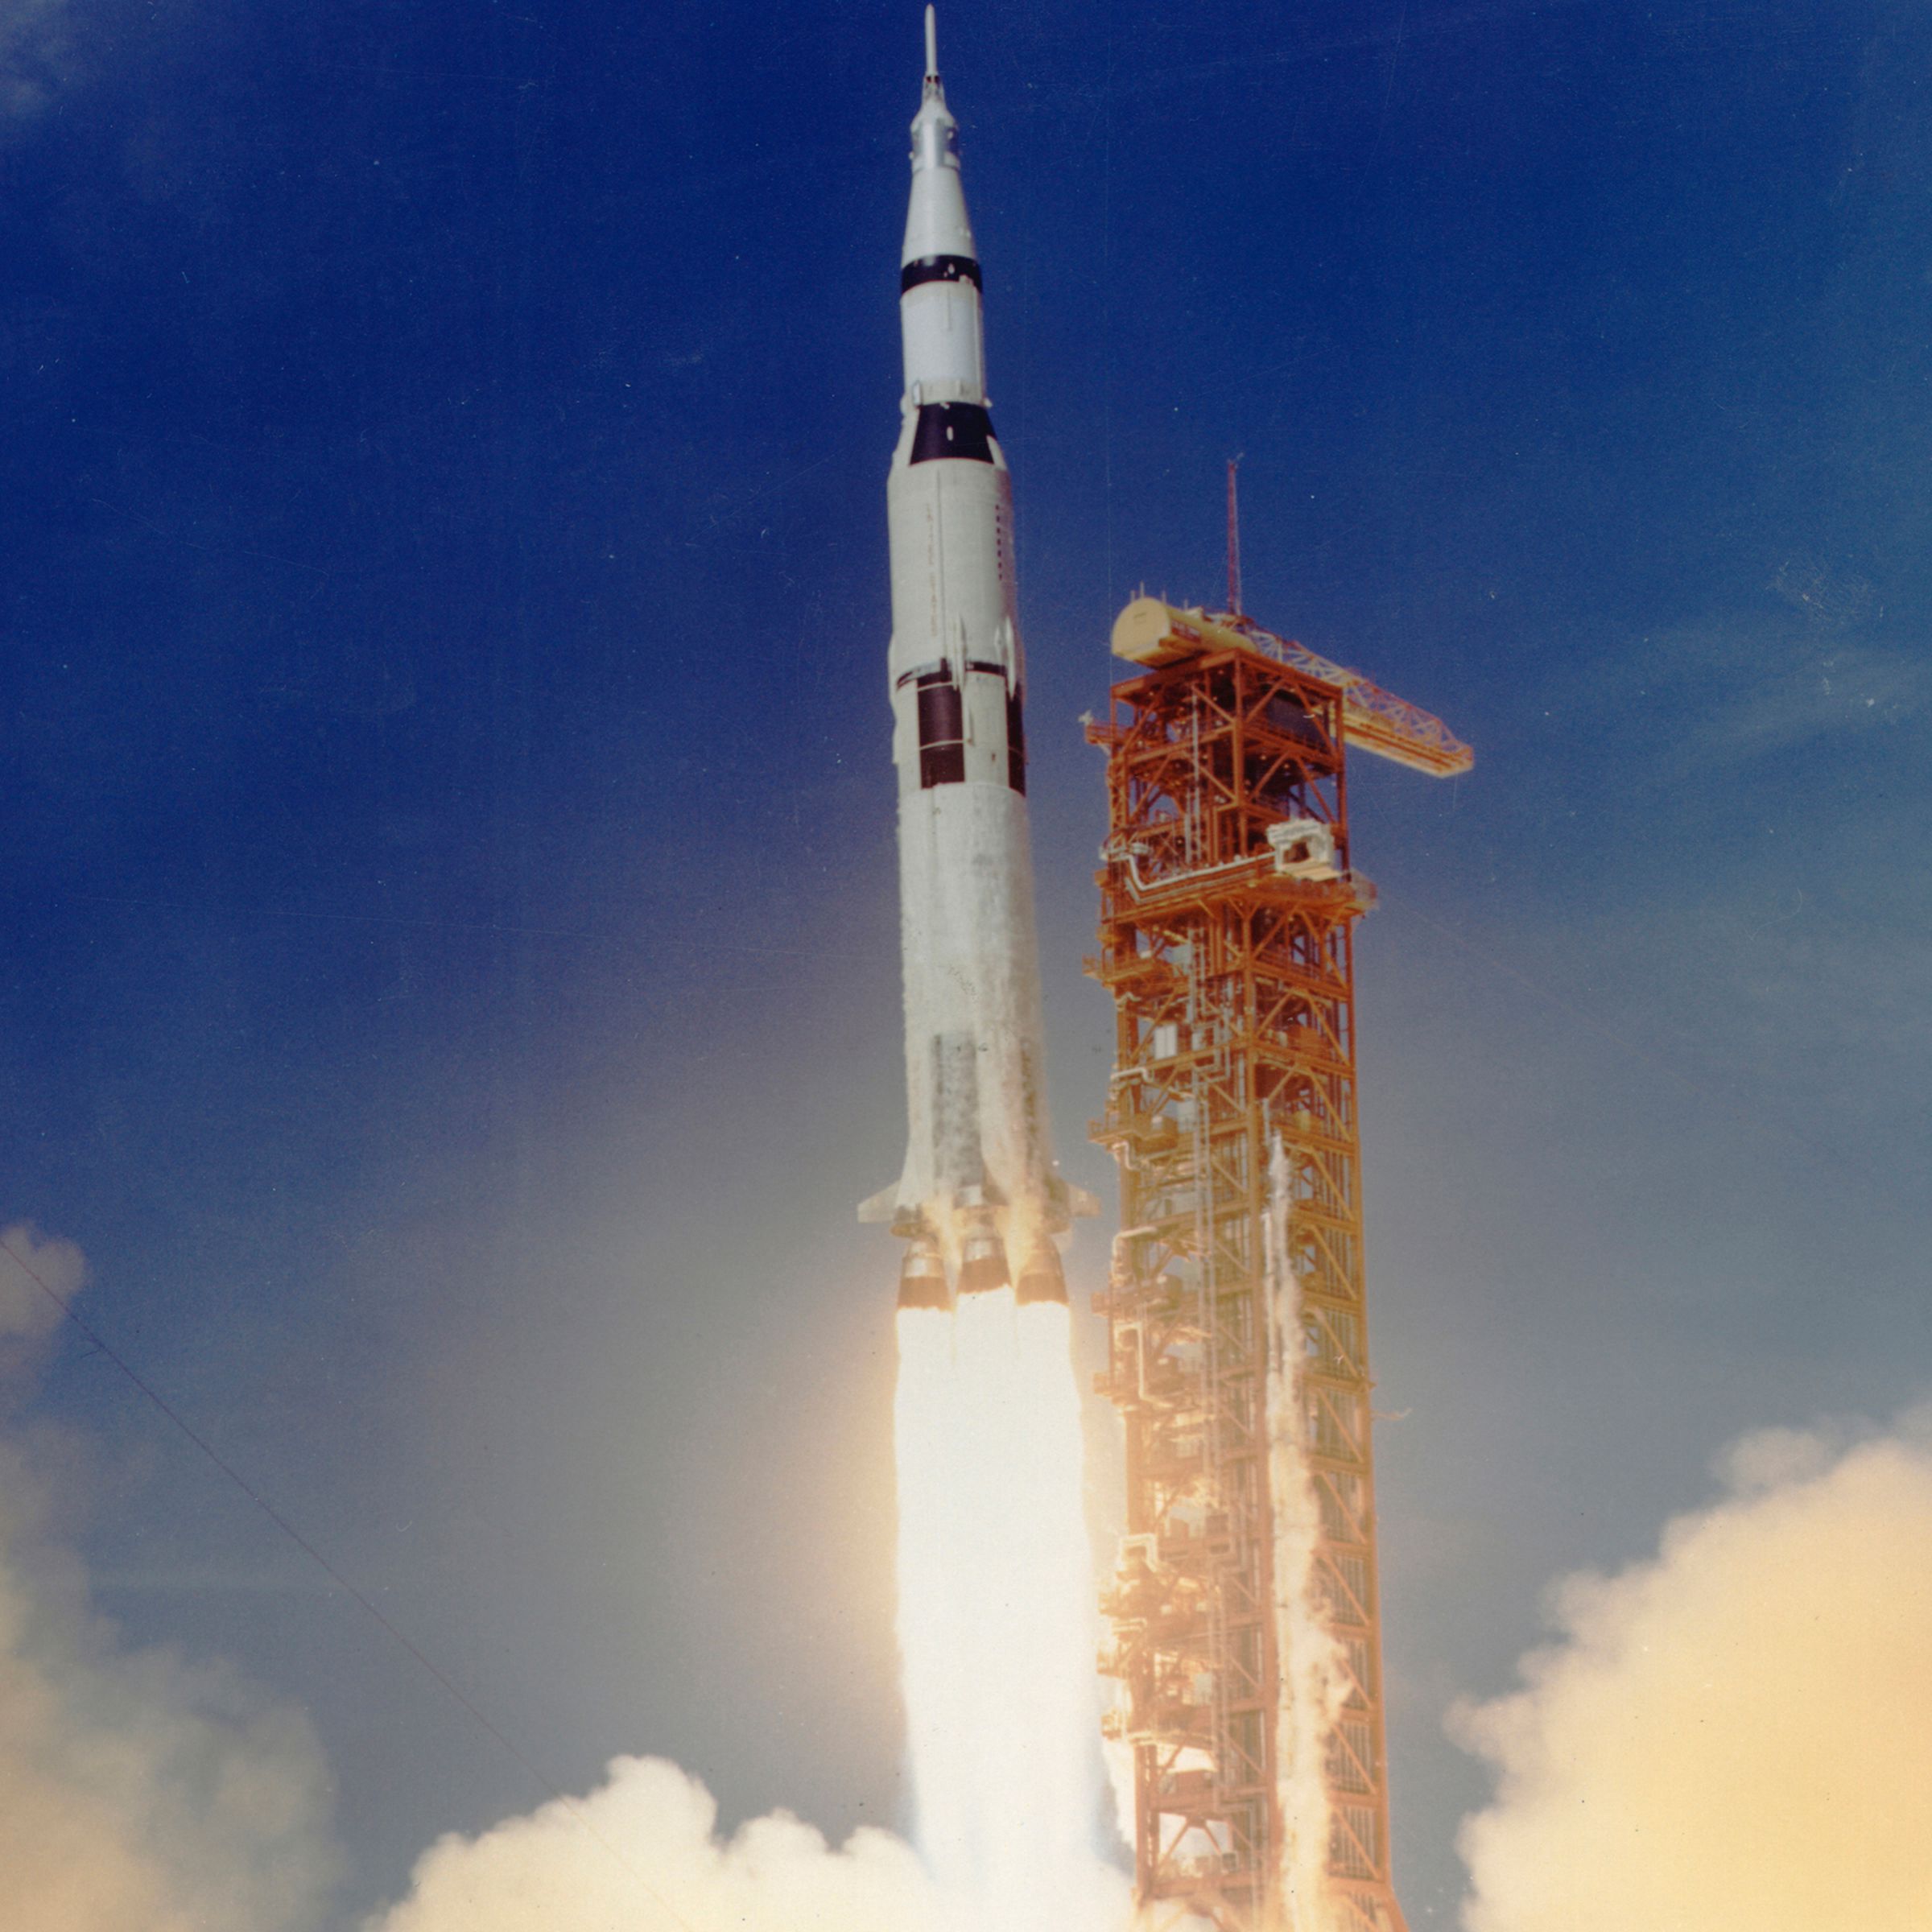 Apollo 11 lifts off